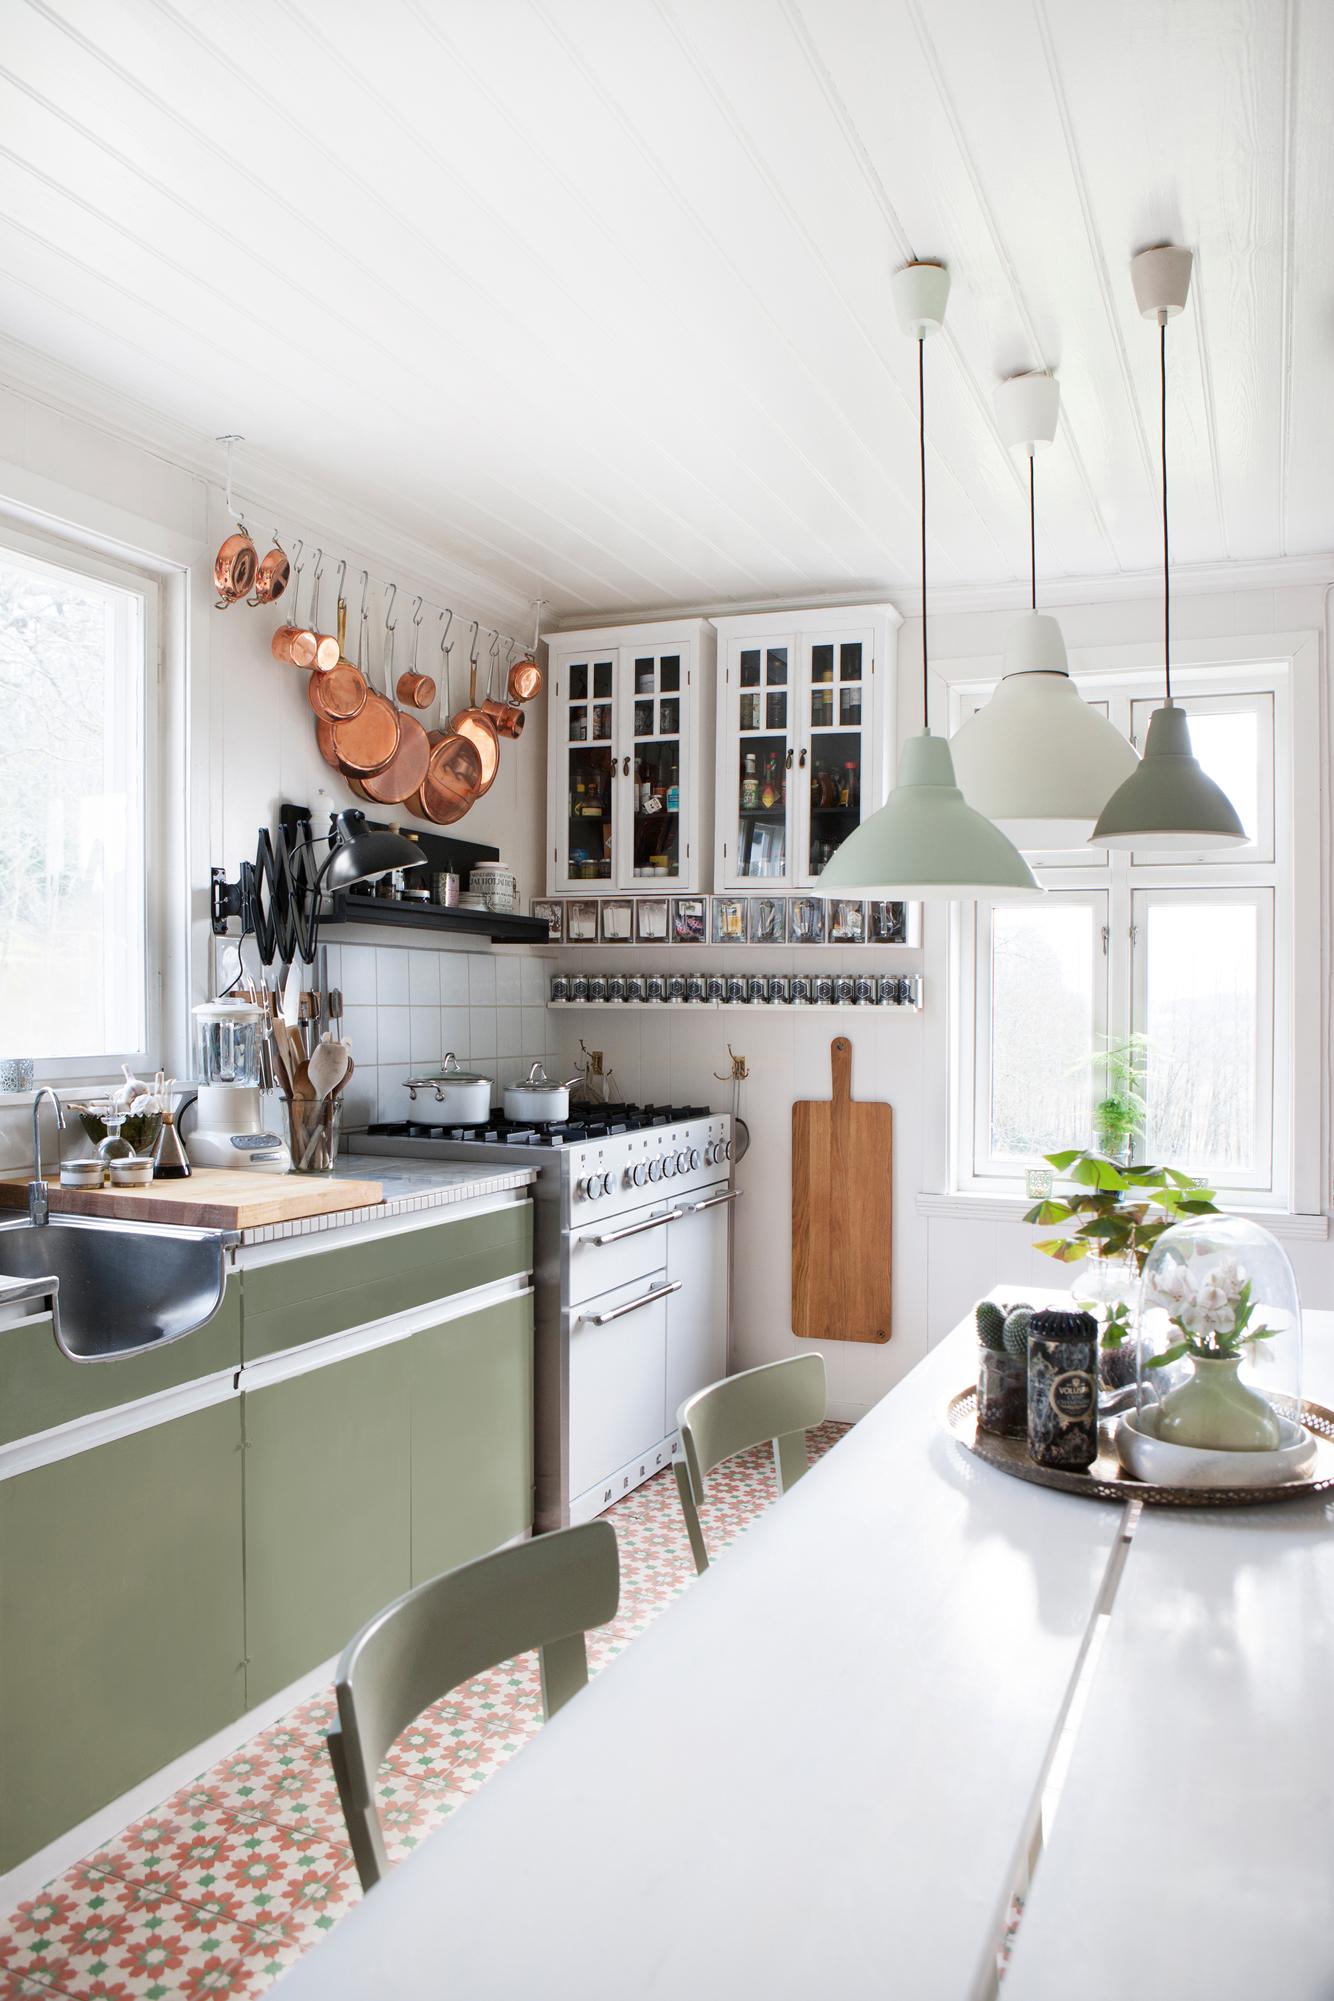 Moderner Landhausstil in Lindgrün #küche #pendelleuchte #zimmergestaltung ©Falcon / ANNETTE & CHRISTIAN PHOTOGRAPHY